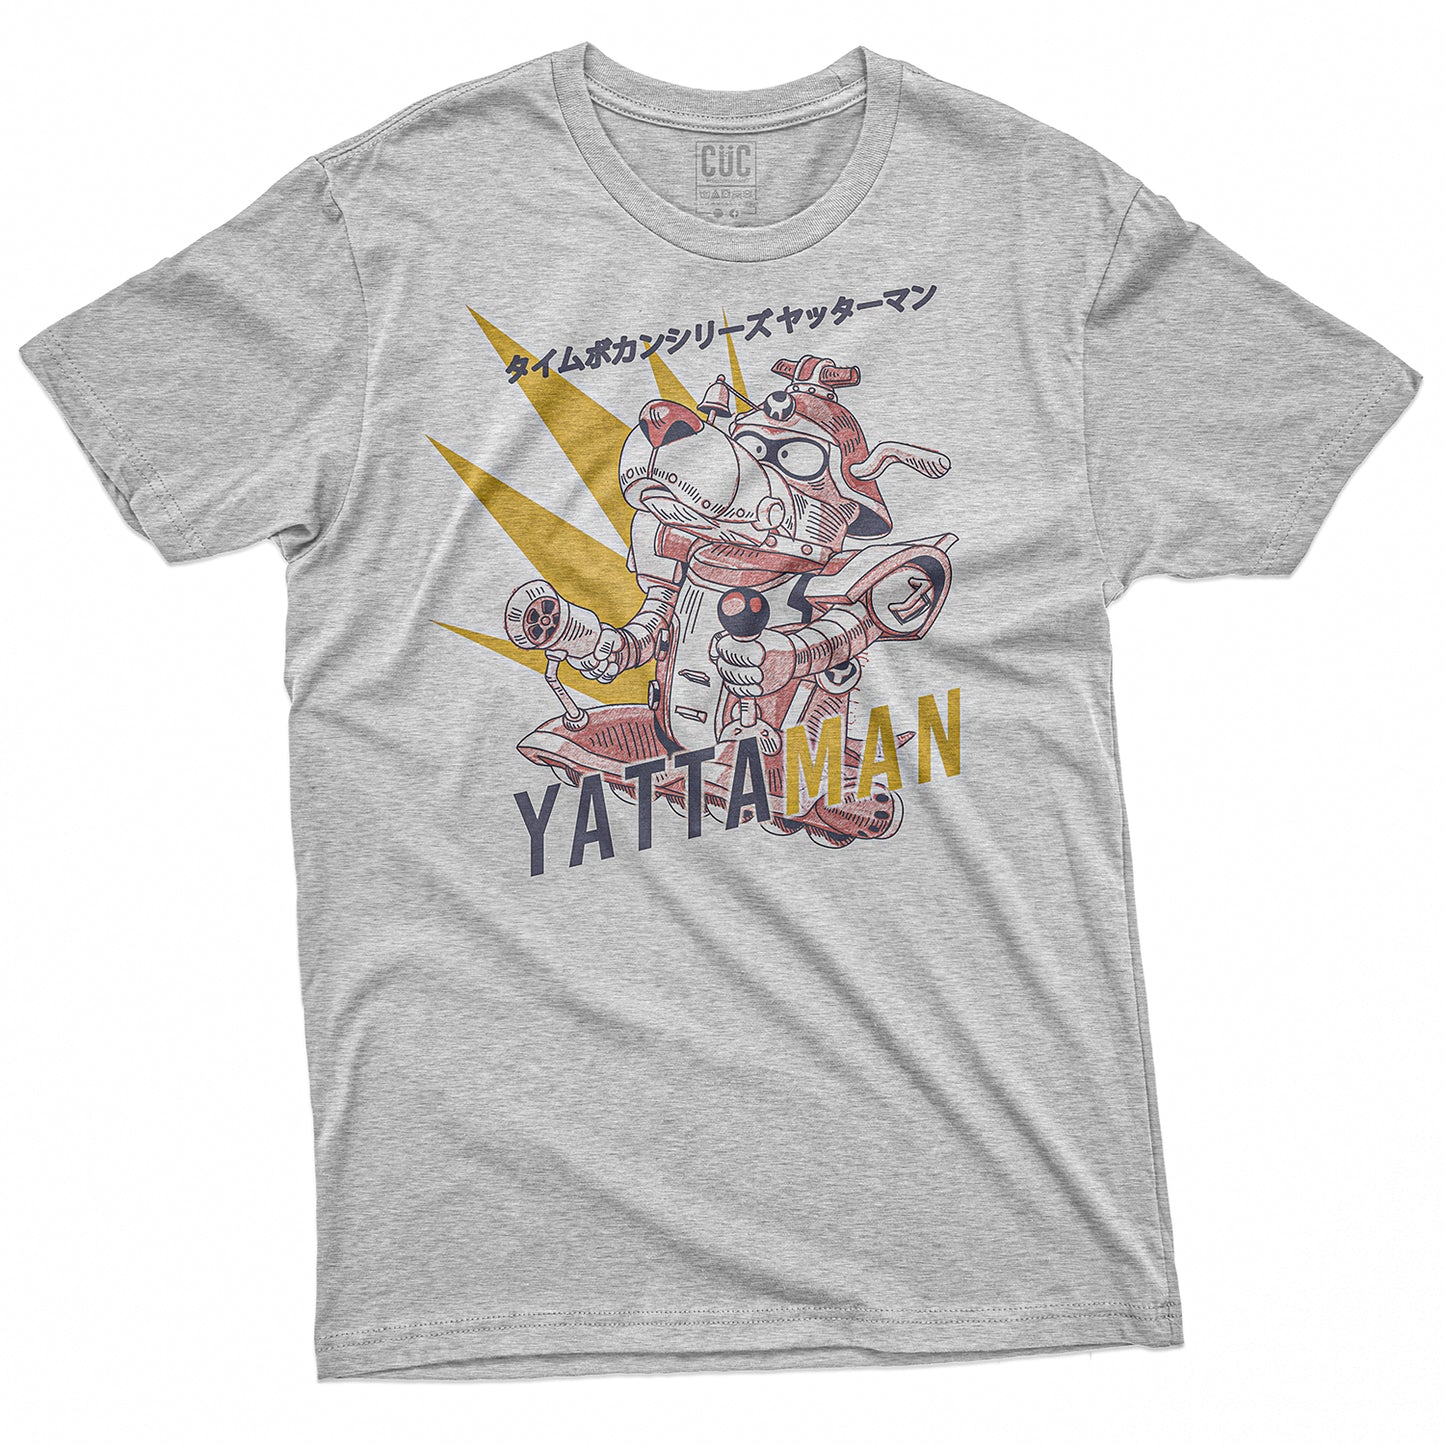 CUC T-Shirt YATTAMAN - Cartoni anni 80  #chooseurcolor